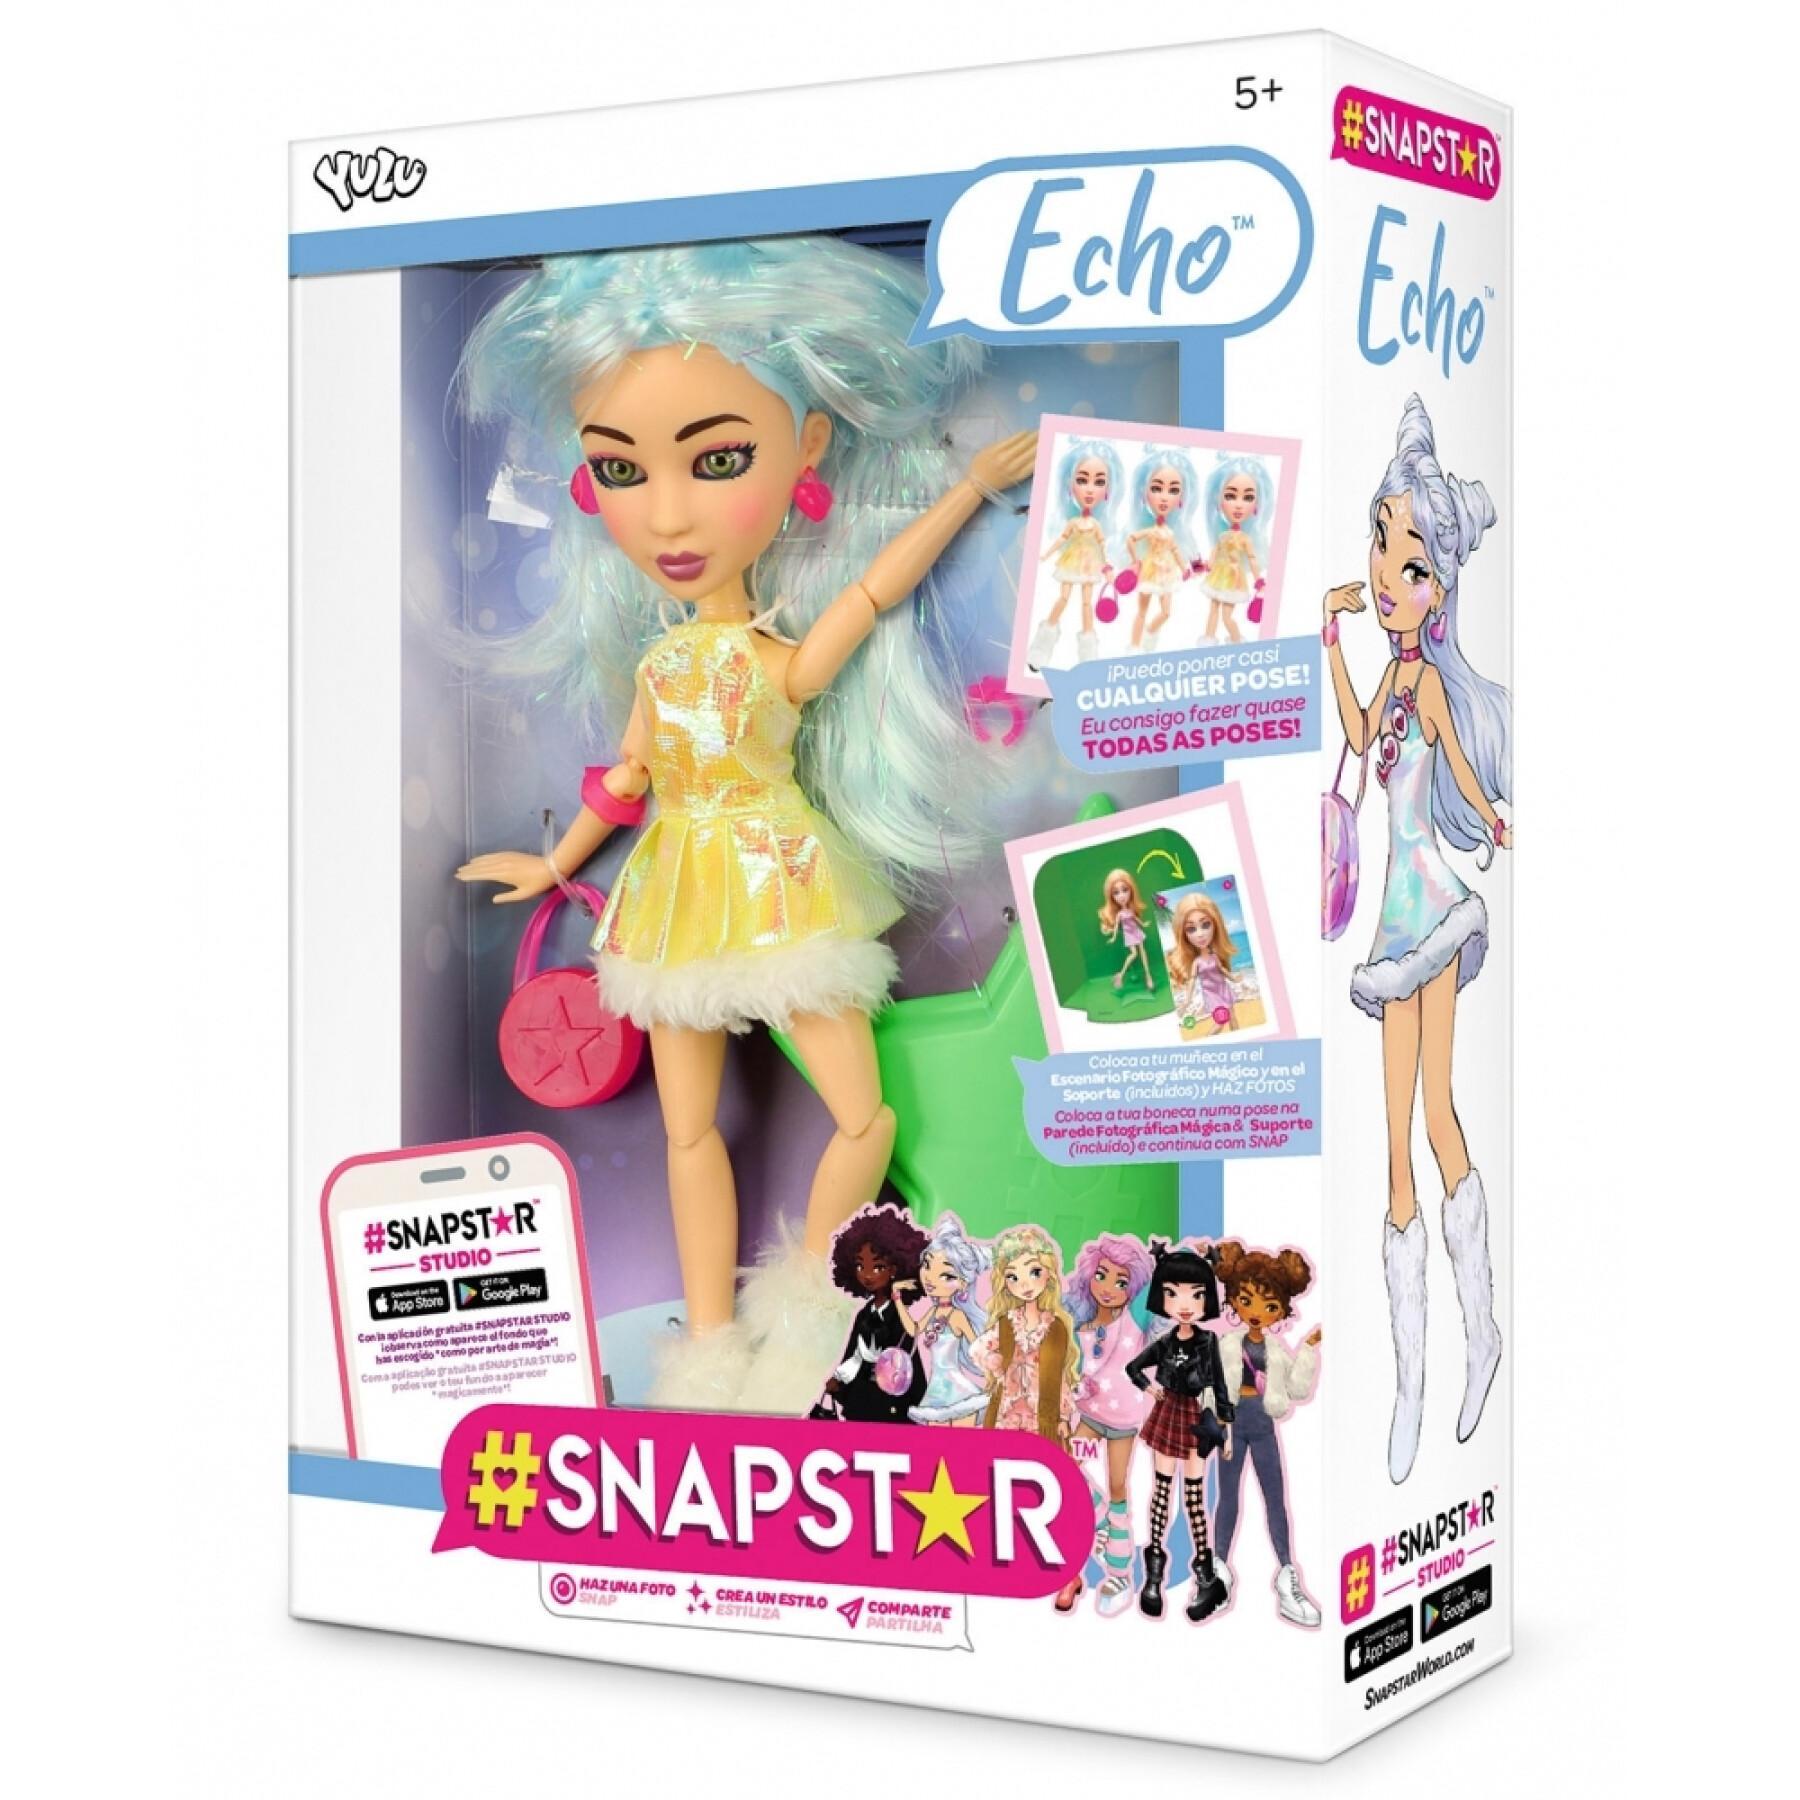 Doll Snapstar Echo